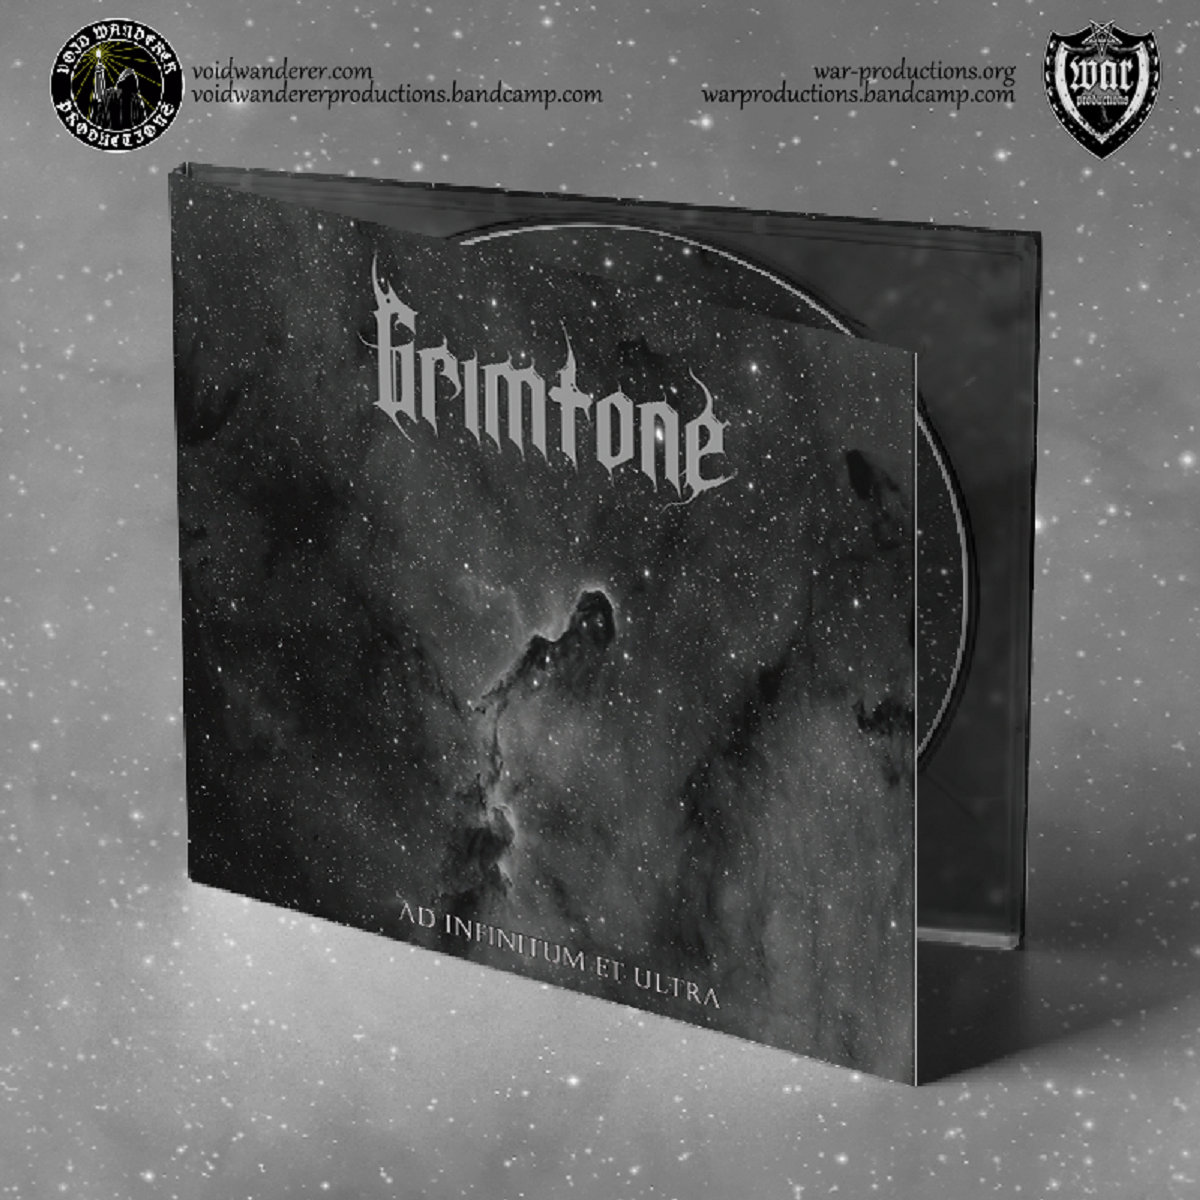 #Grimtone  #ReleaseDay 

'Ad Infinitum et Ultra' the new album from Grimtone is released via @WarProd & #VoidWandererProductions in Digipack & @Kandelaber15 in tape

warproductions.bandcamp.com/album/wpcd050
 
#WarProductions
#SupportTheUnderground